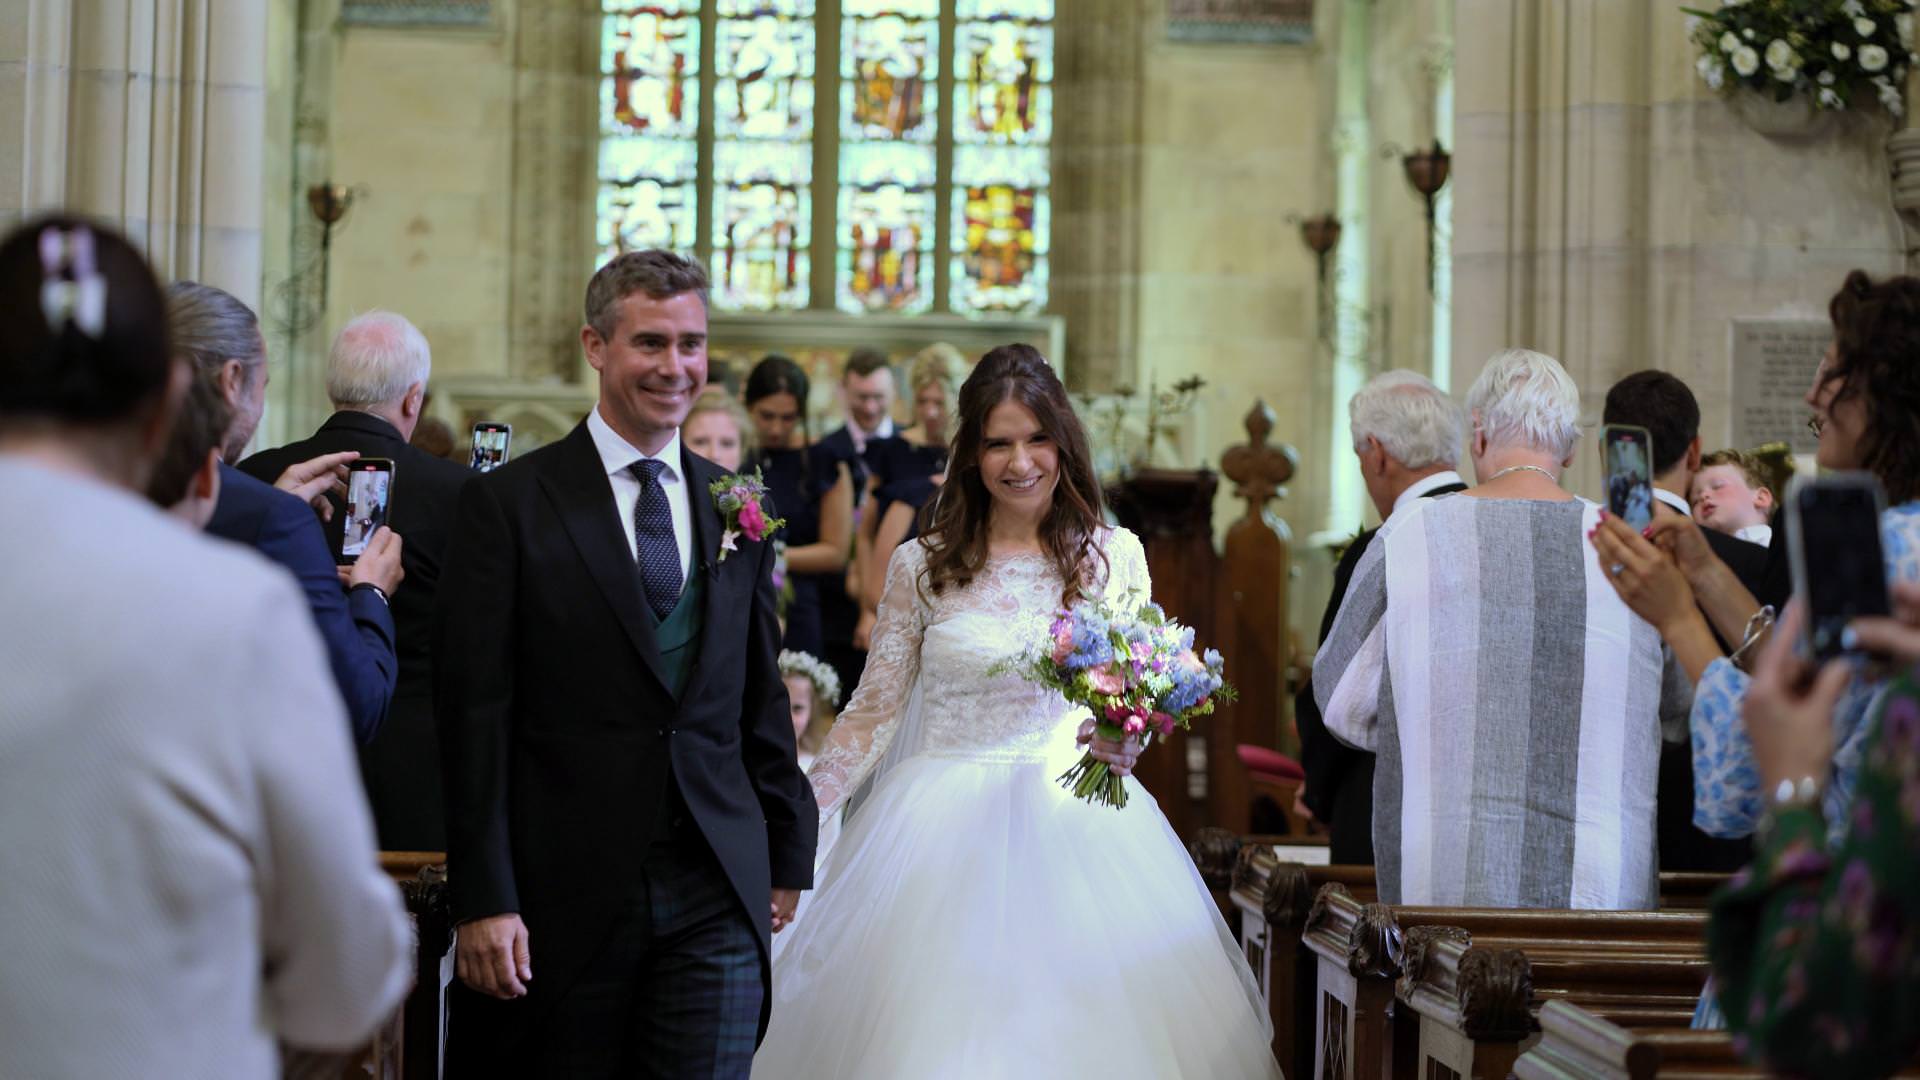 videographer films bride and groom leaving wedding ceremony